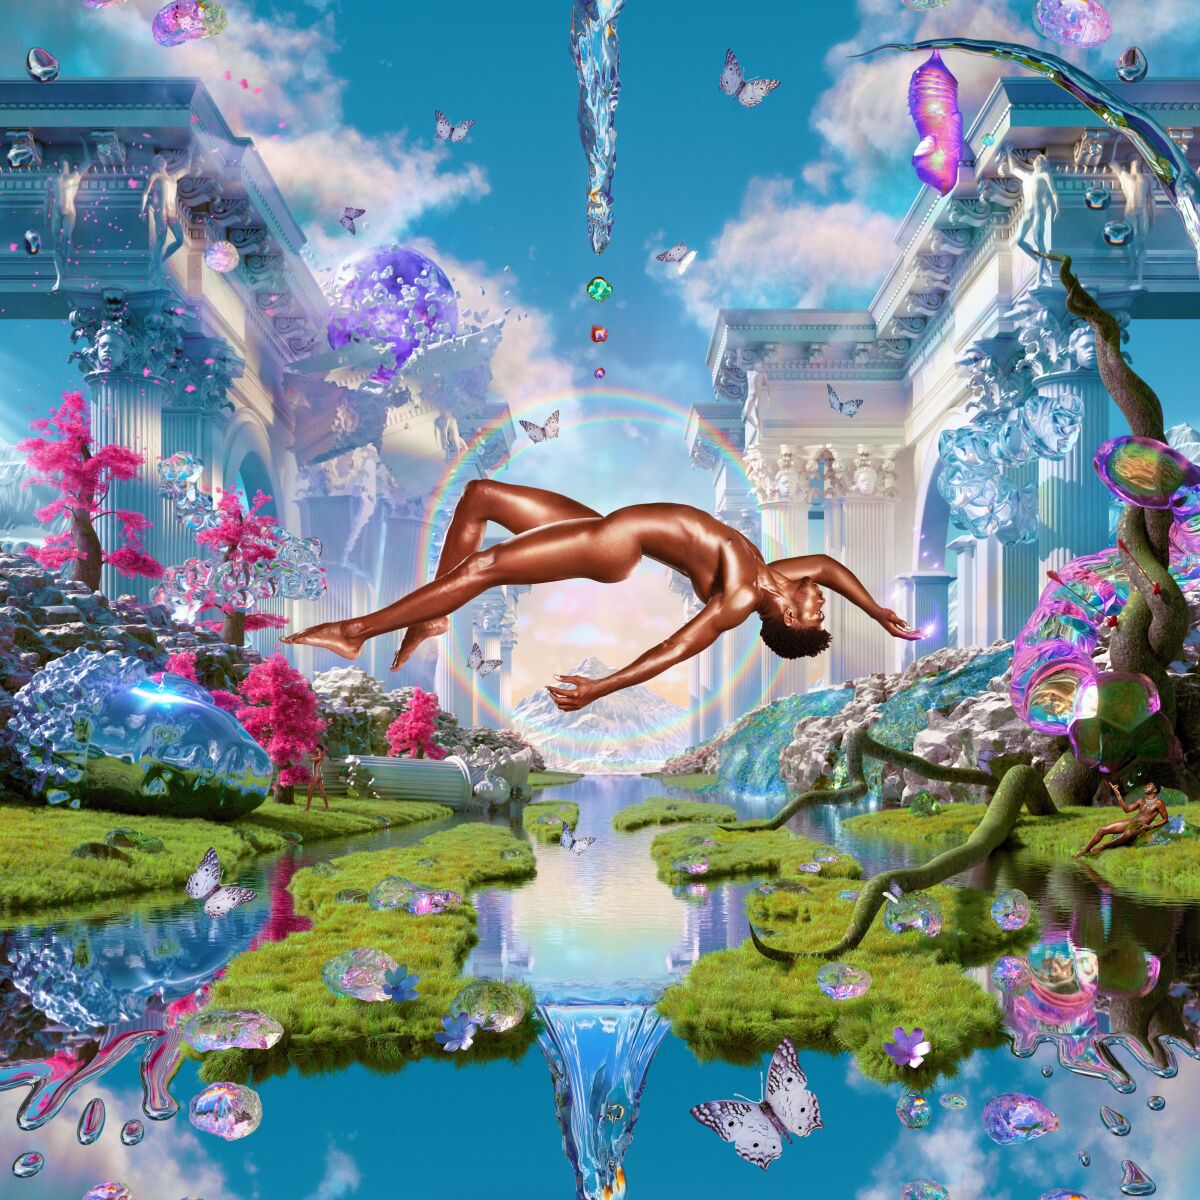 A naked man floats through a mystical scene